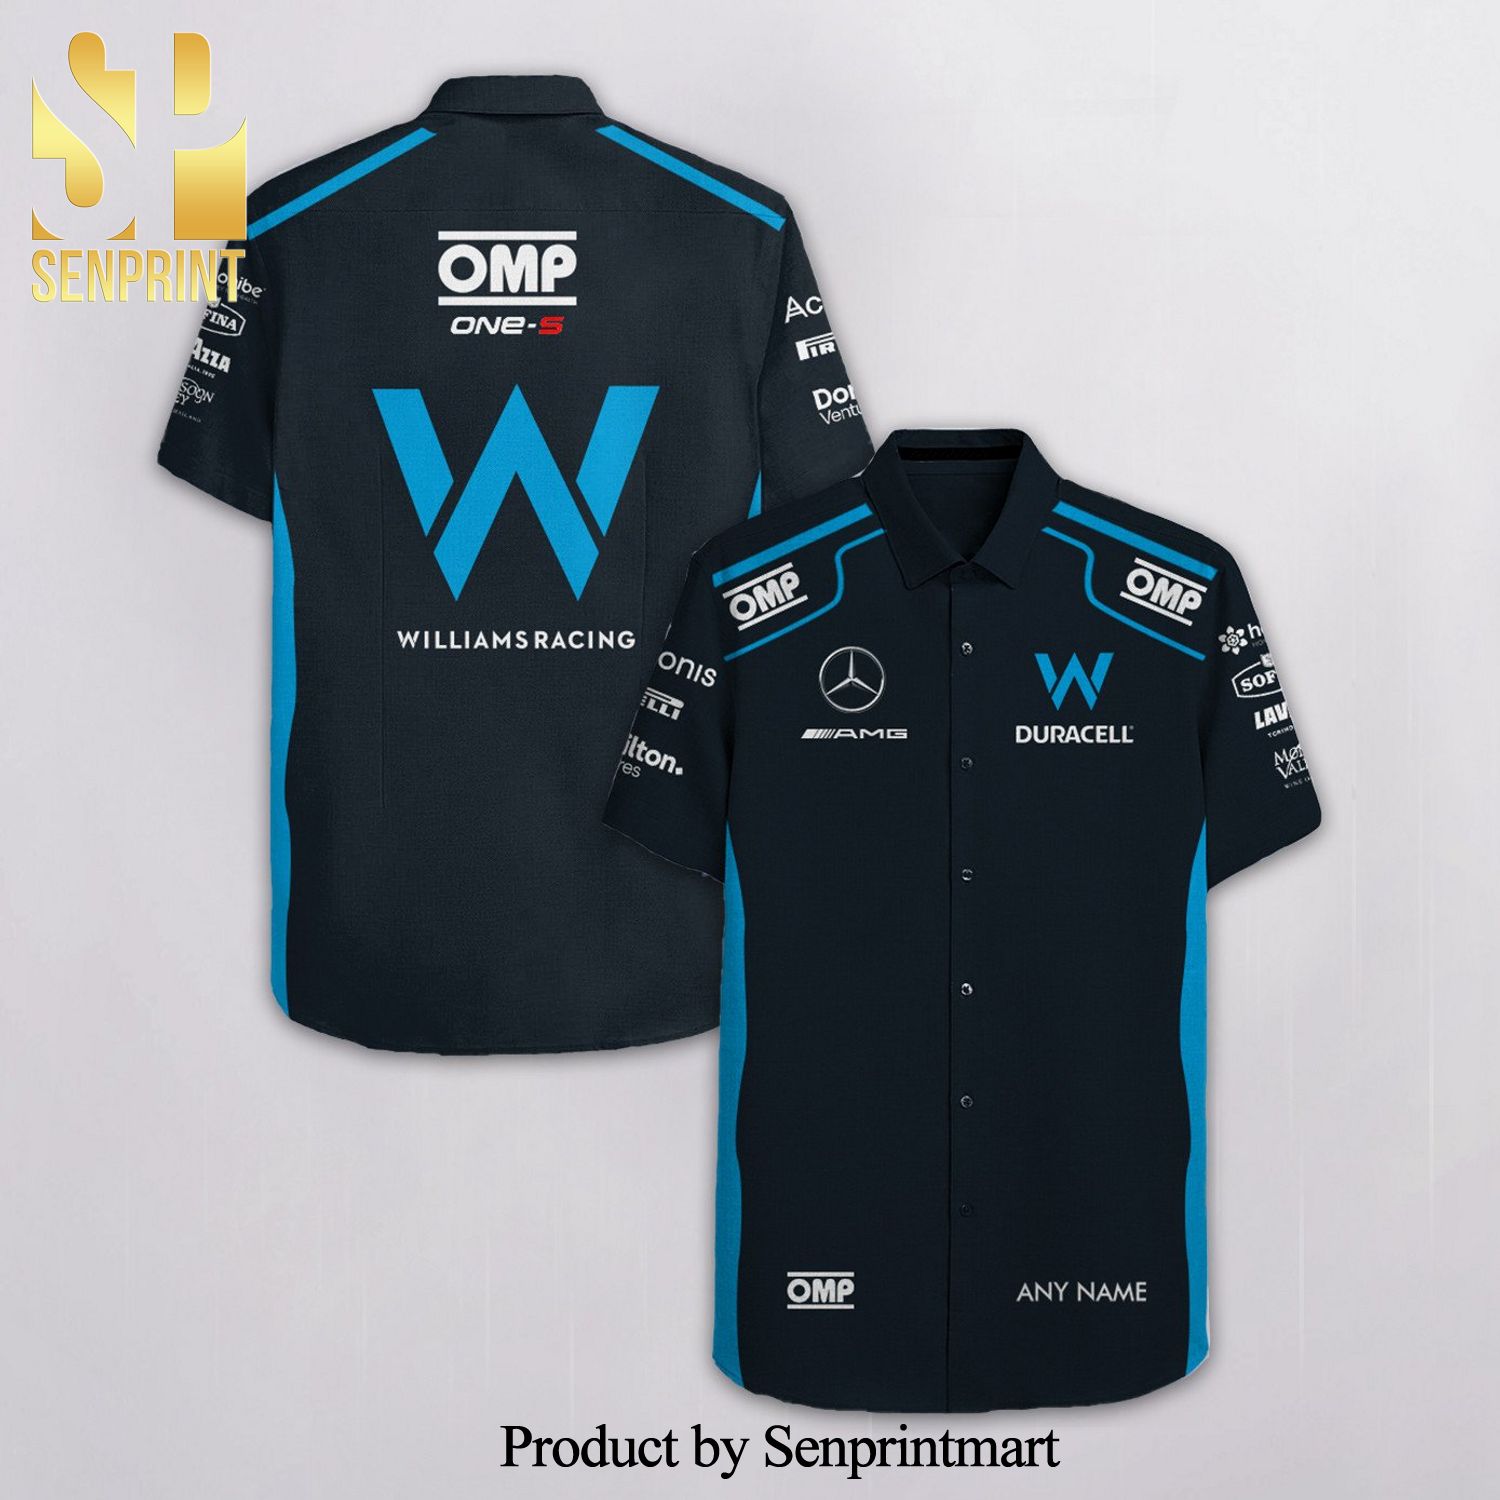 Personalized Williams F1 Racing Duracell Omp One-S Full Printing Hawaiian Shirt – Black